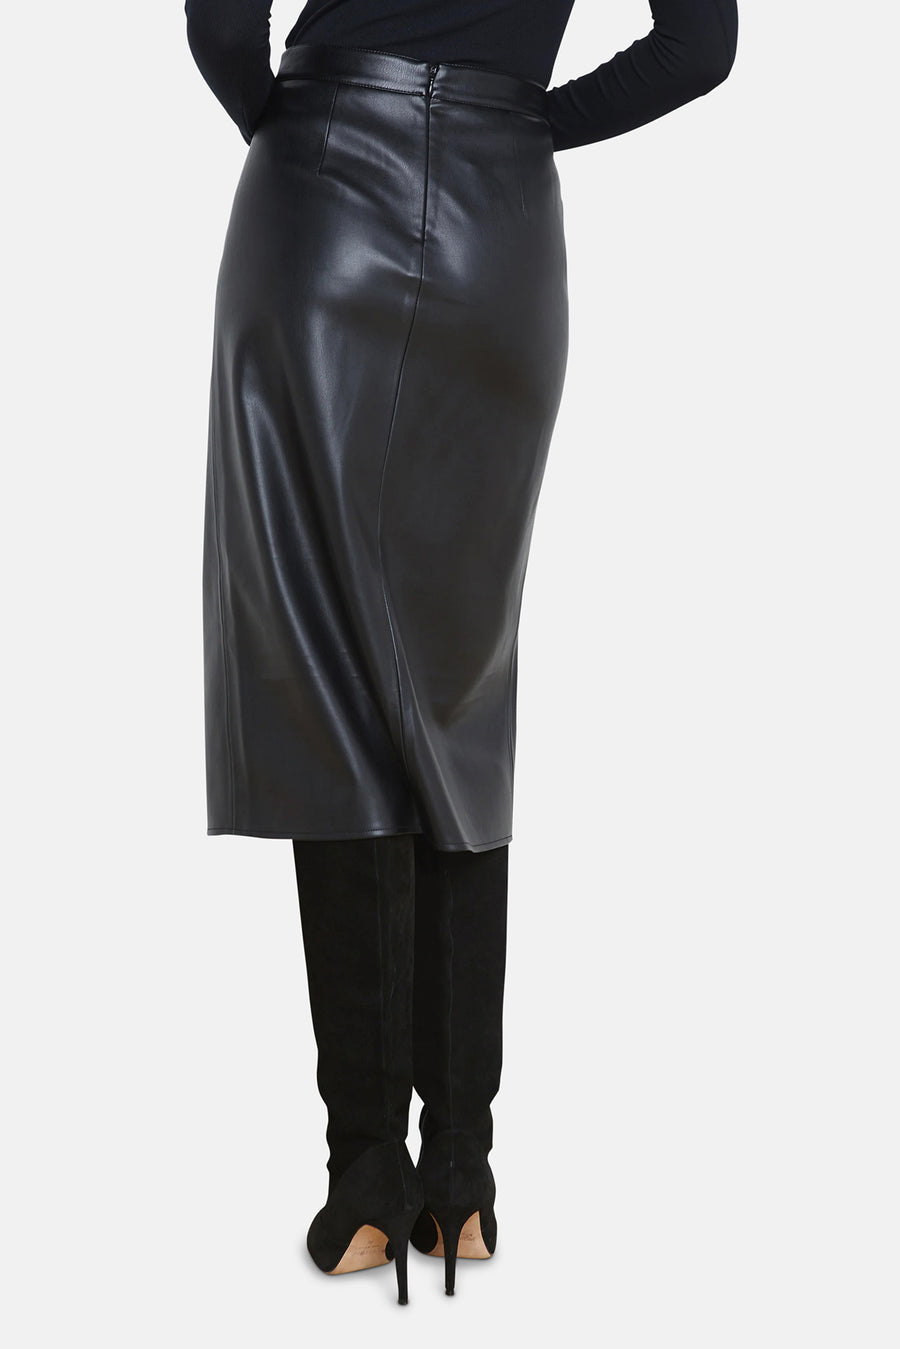 Milann Faux Leather Skirt Black